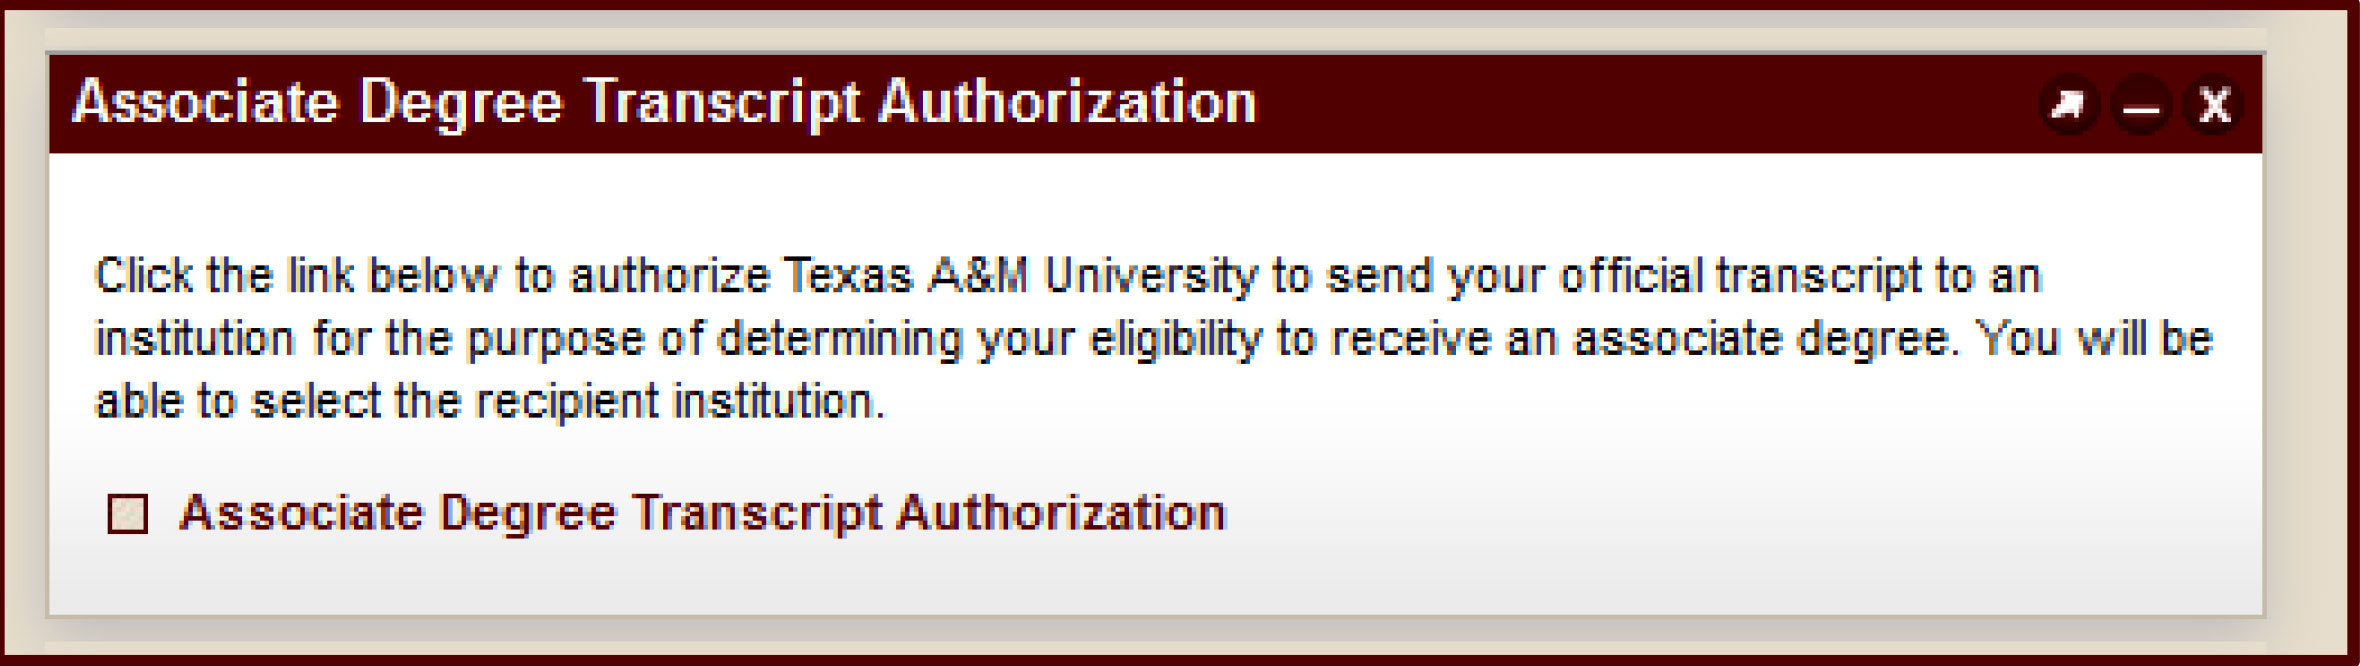 Associate Degree Transcript Authorization screen shot images in Howdy Portal